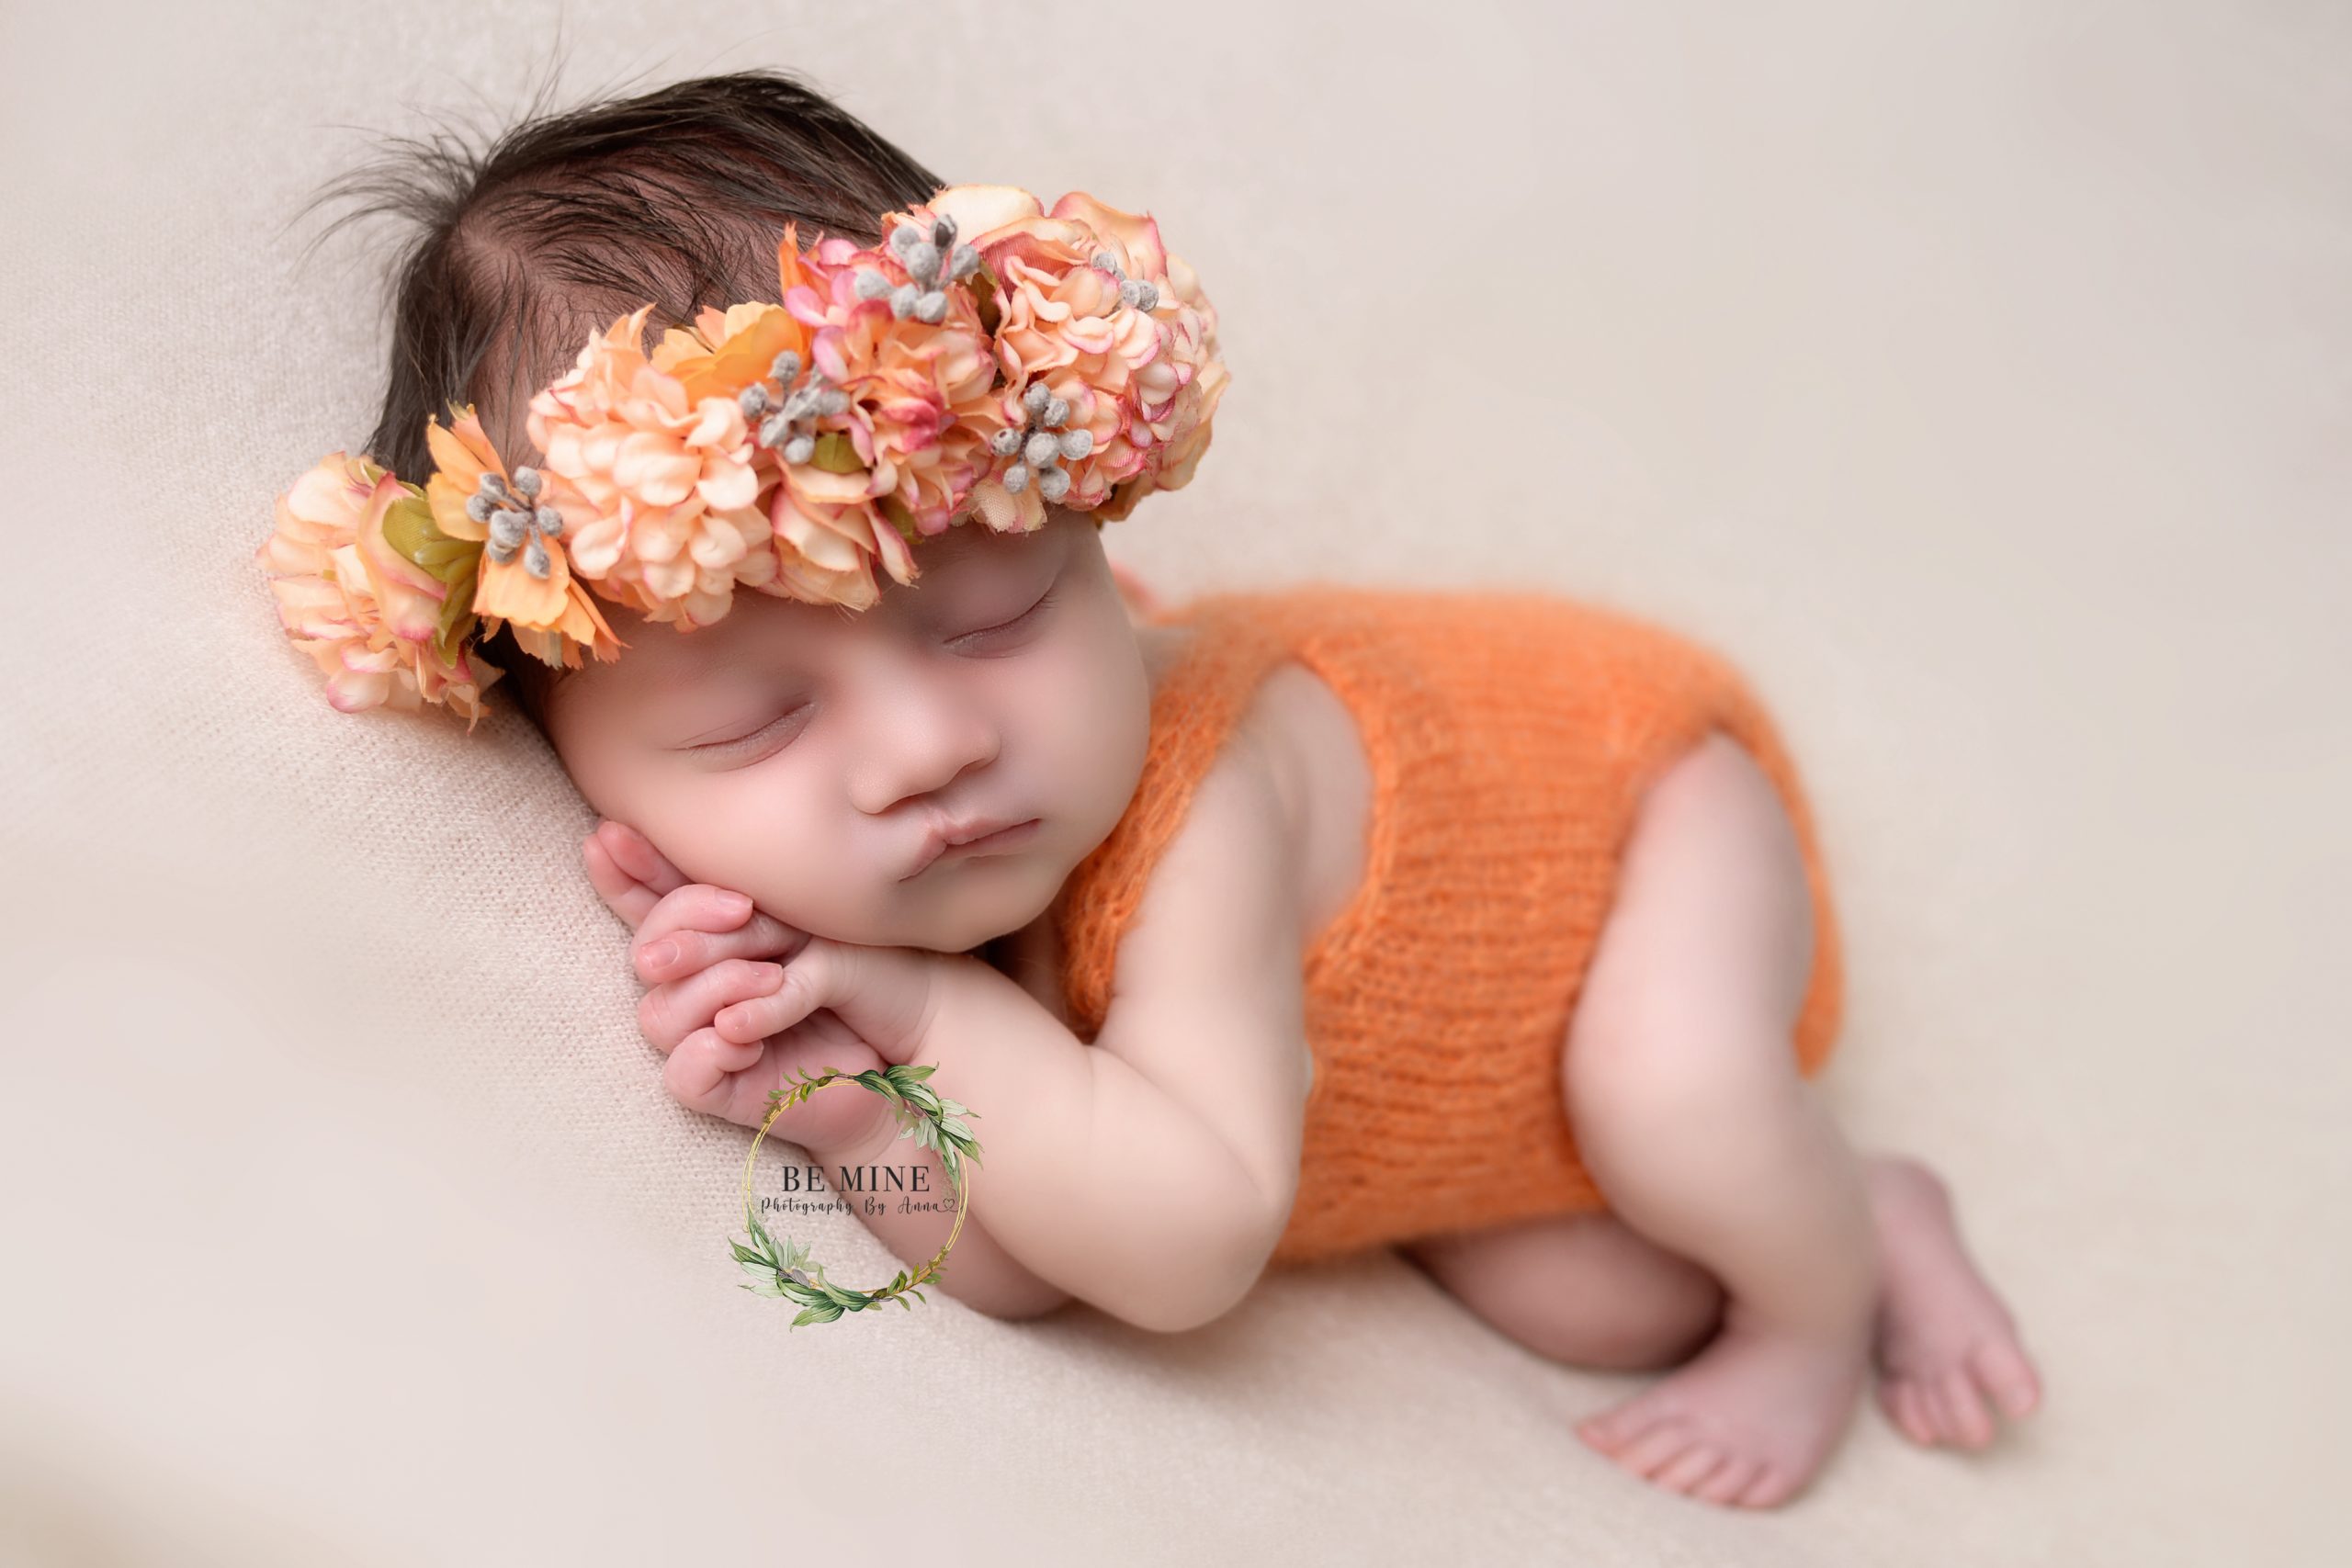 Sleeping baby with flower headband